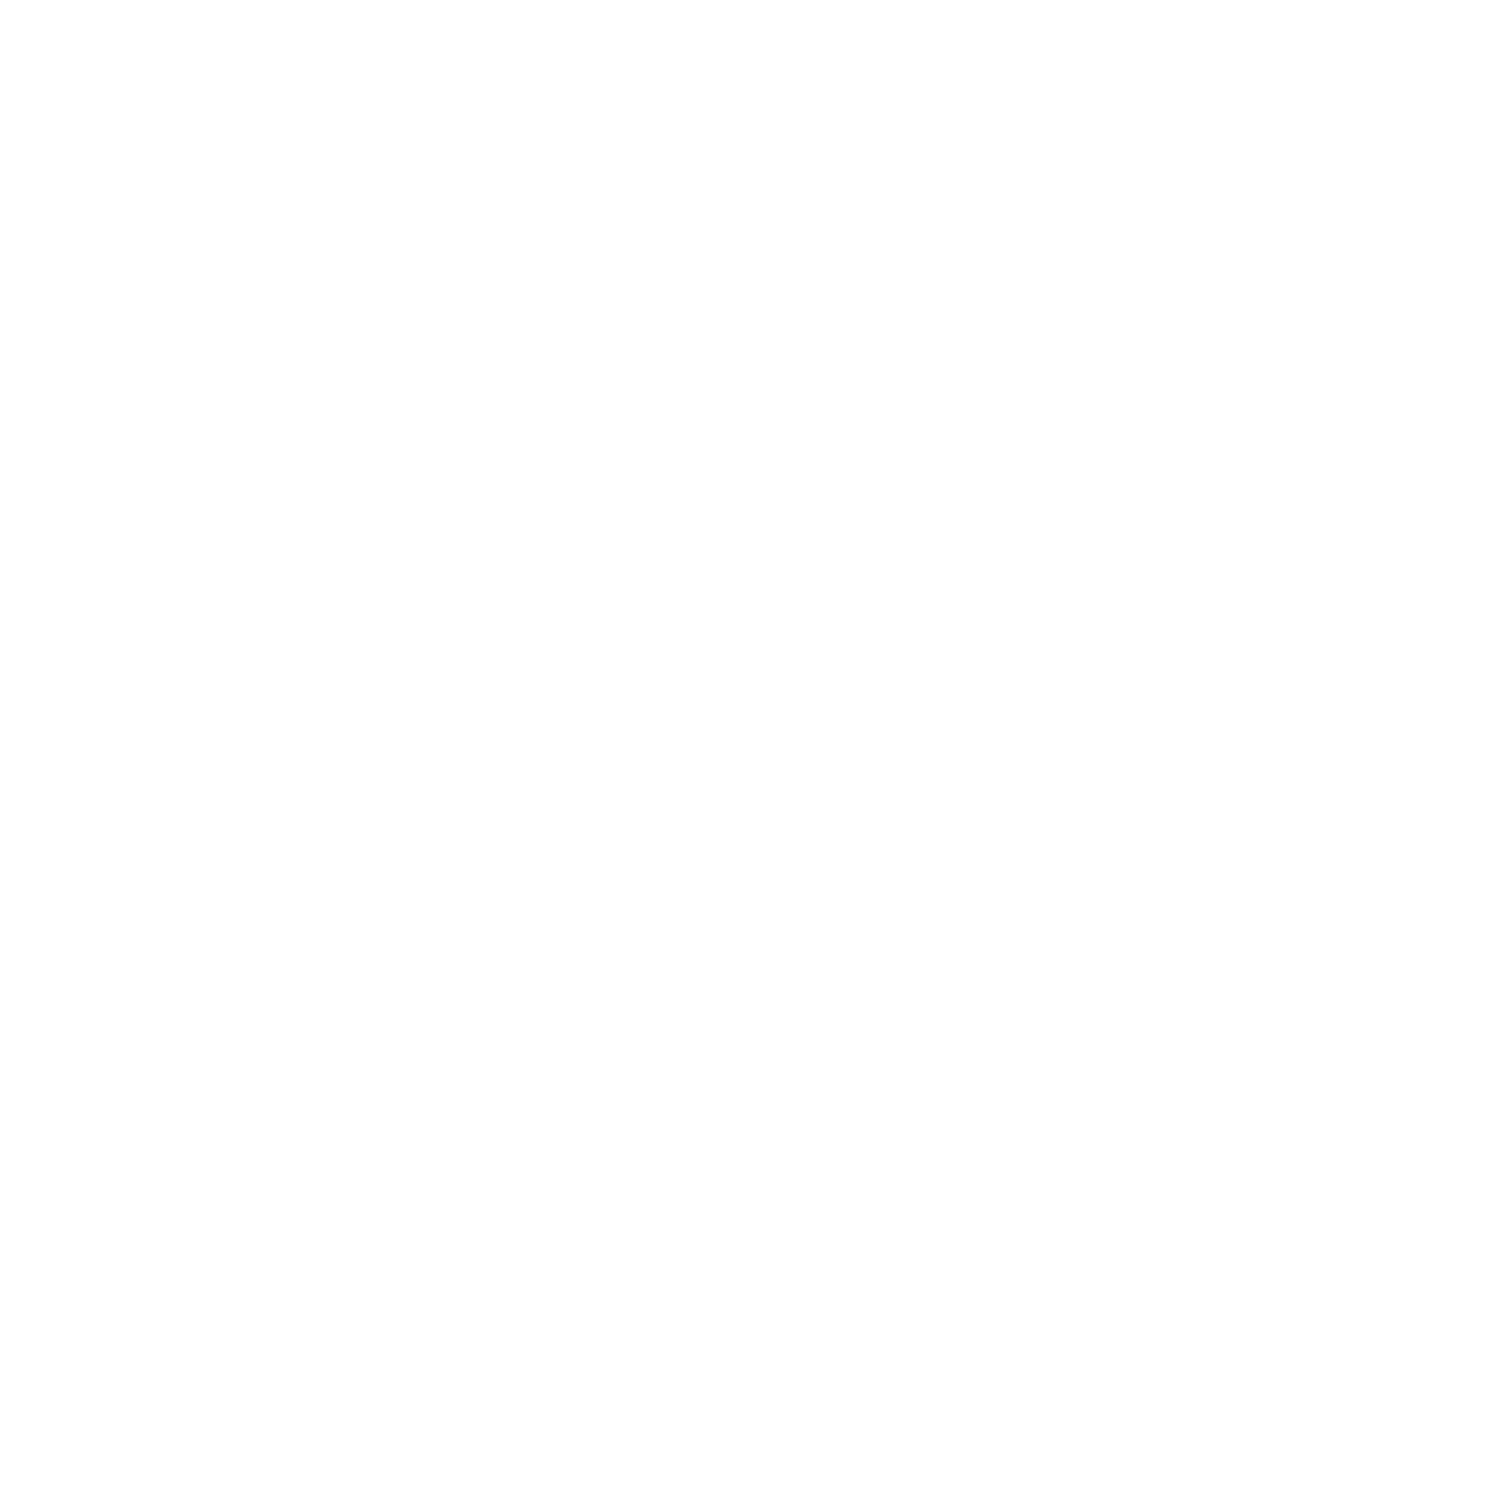 Caan Rose Estates Ltd - Slough : Letting agents in Northolt Greater London Ealing